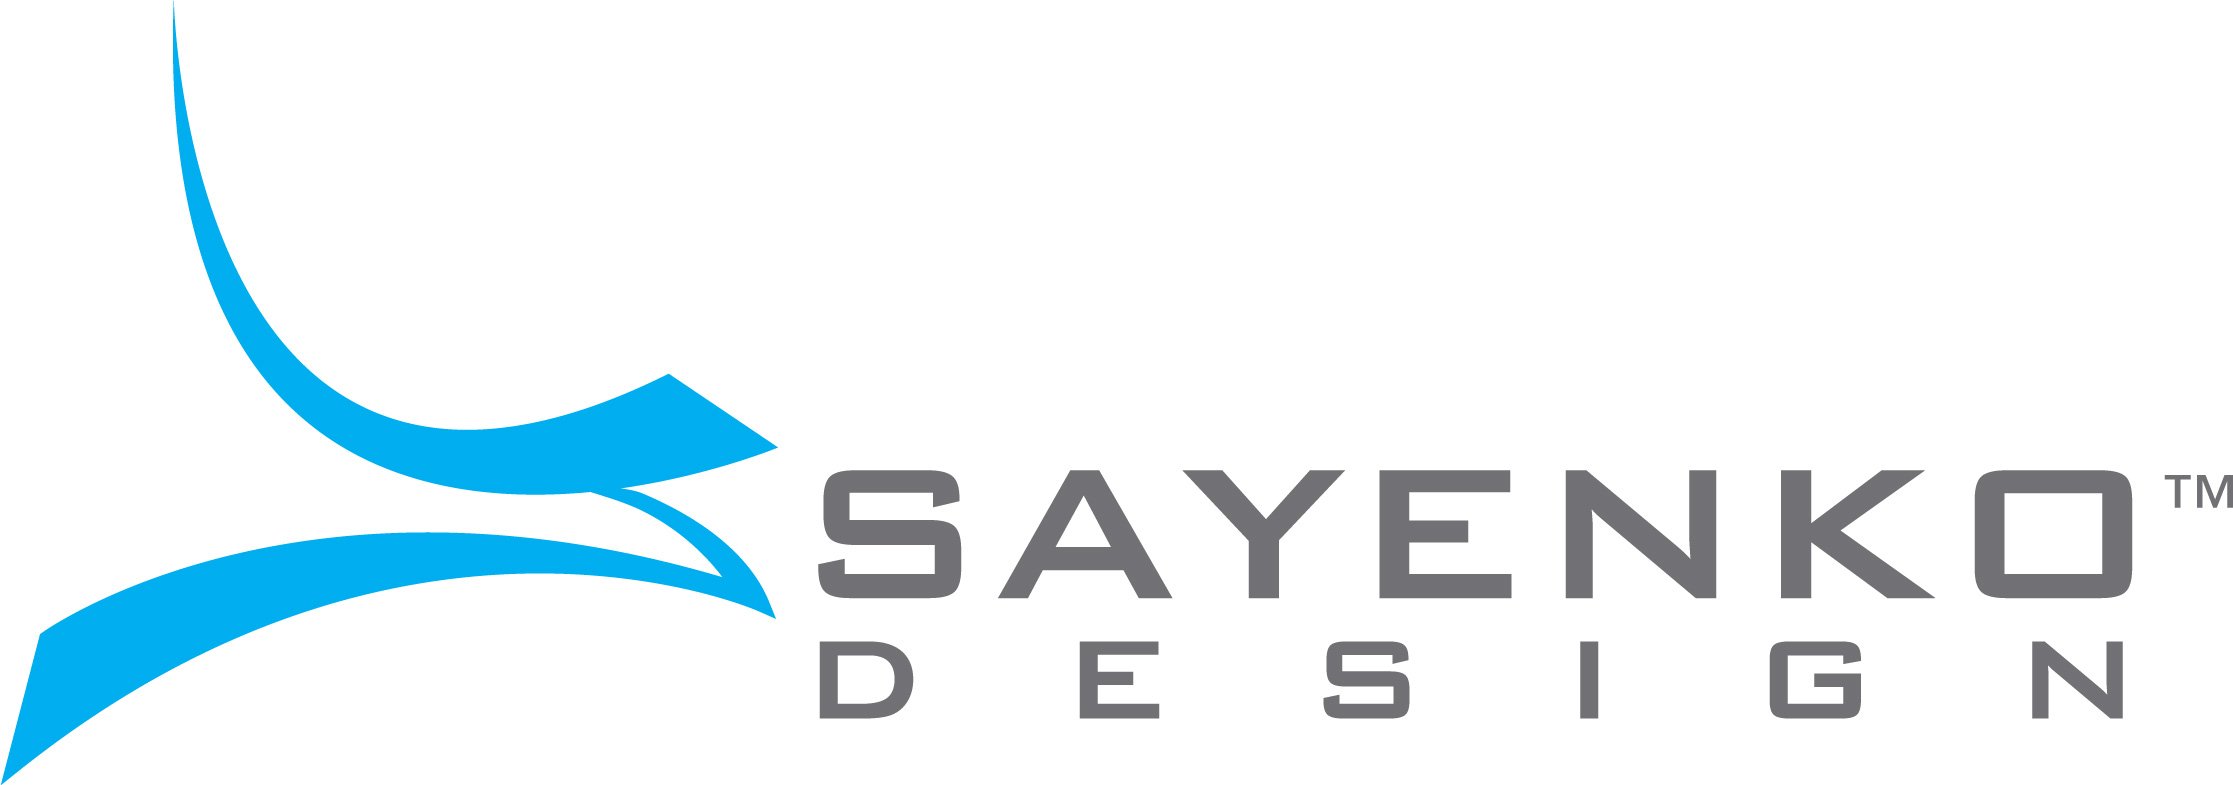 Top Website Development Business Logo: Sayenko Design